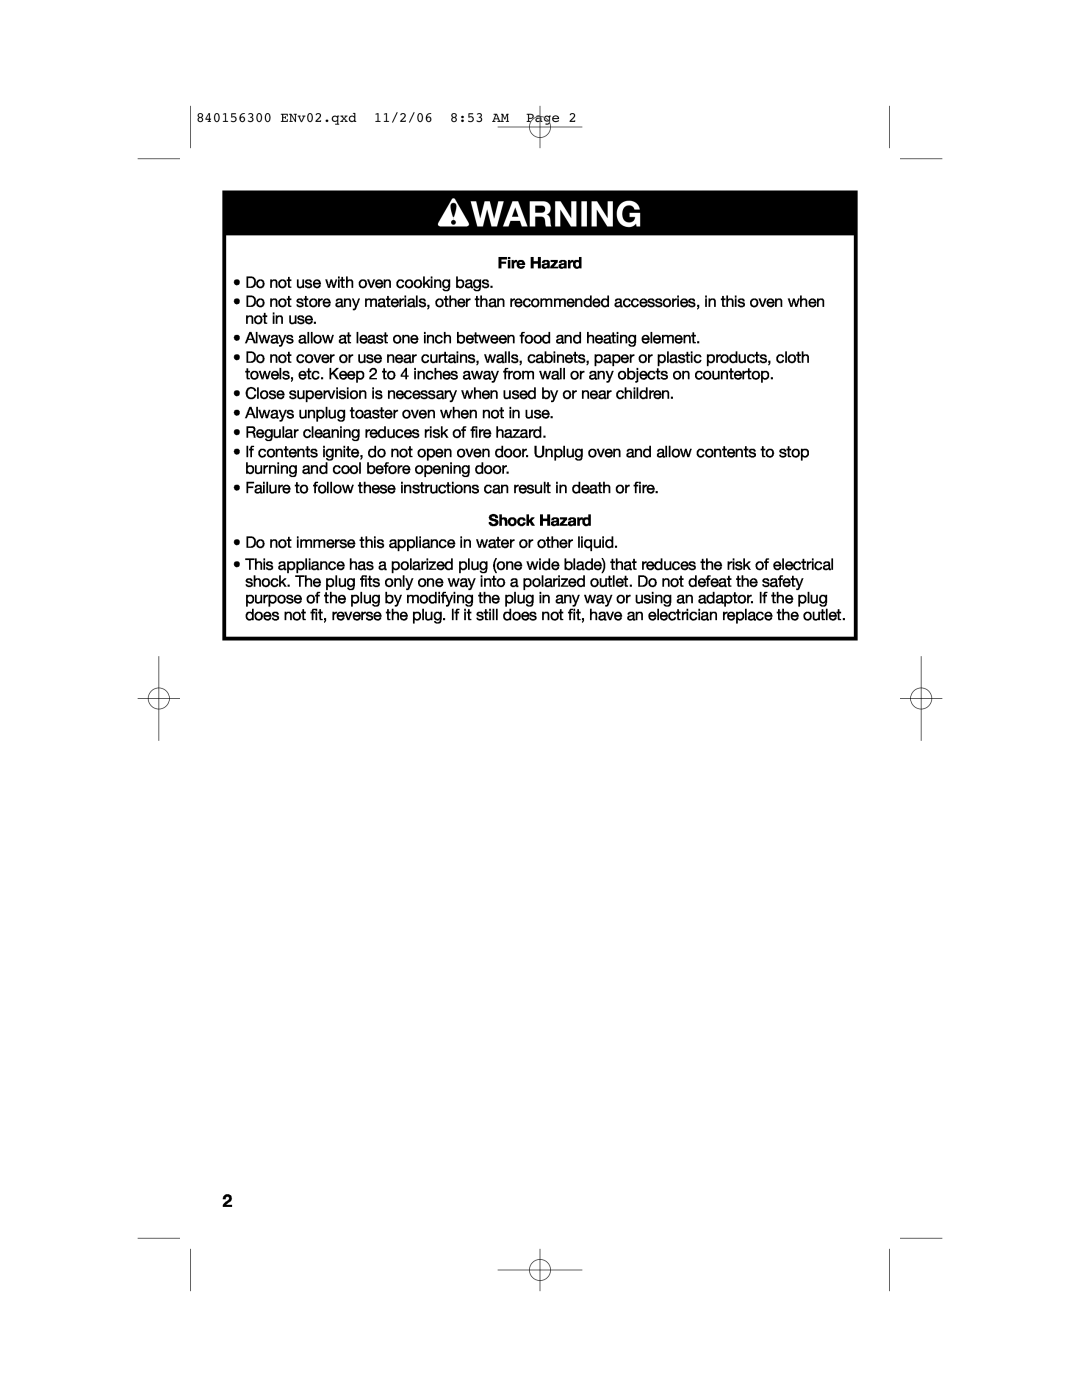 Hamilton Beach 840156300 manual wWARNING, Fire Hazard, Shock Hazard 